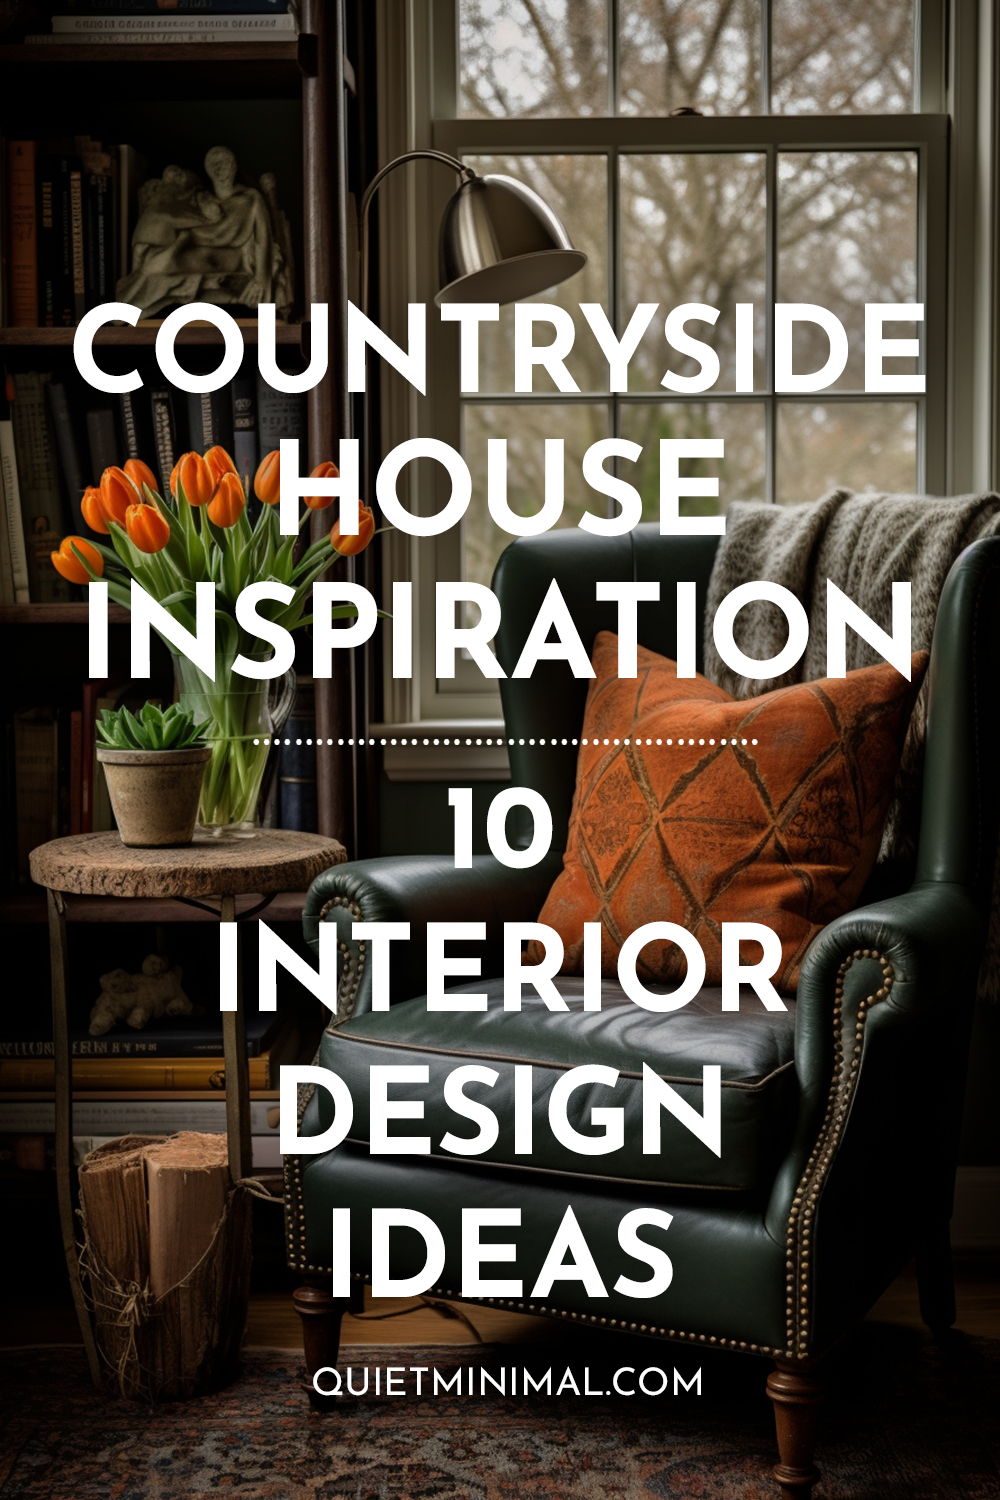 10 interior design ideas for a countryside house